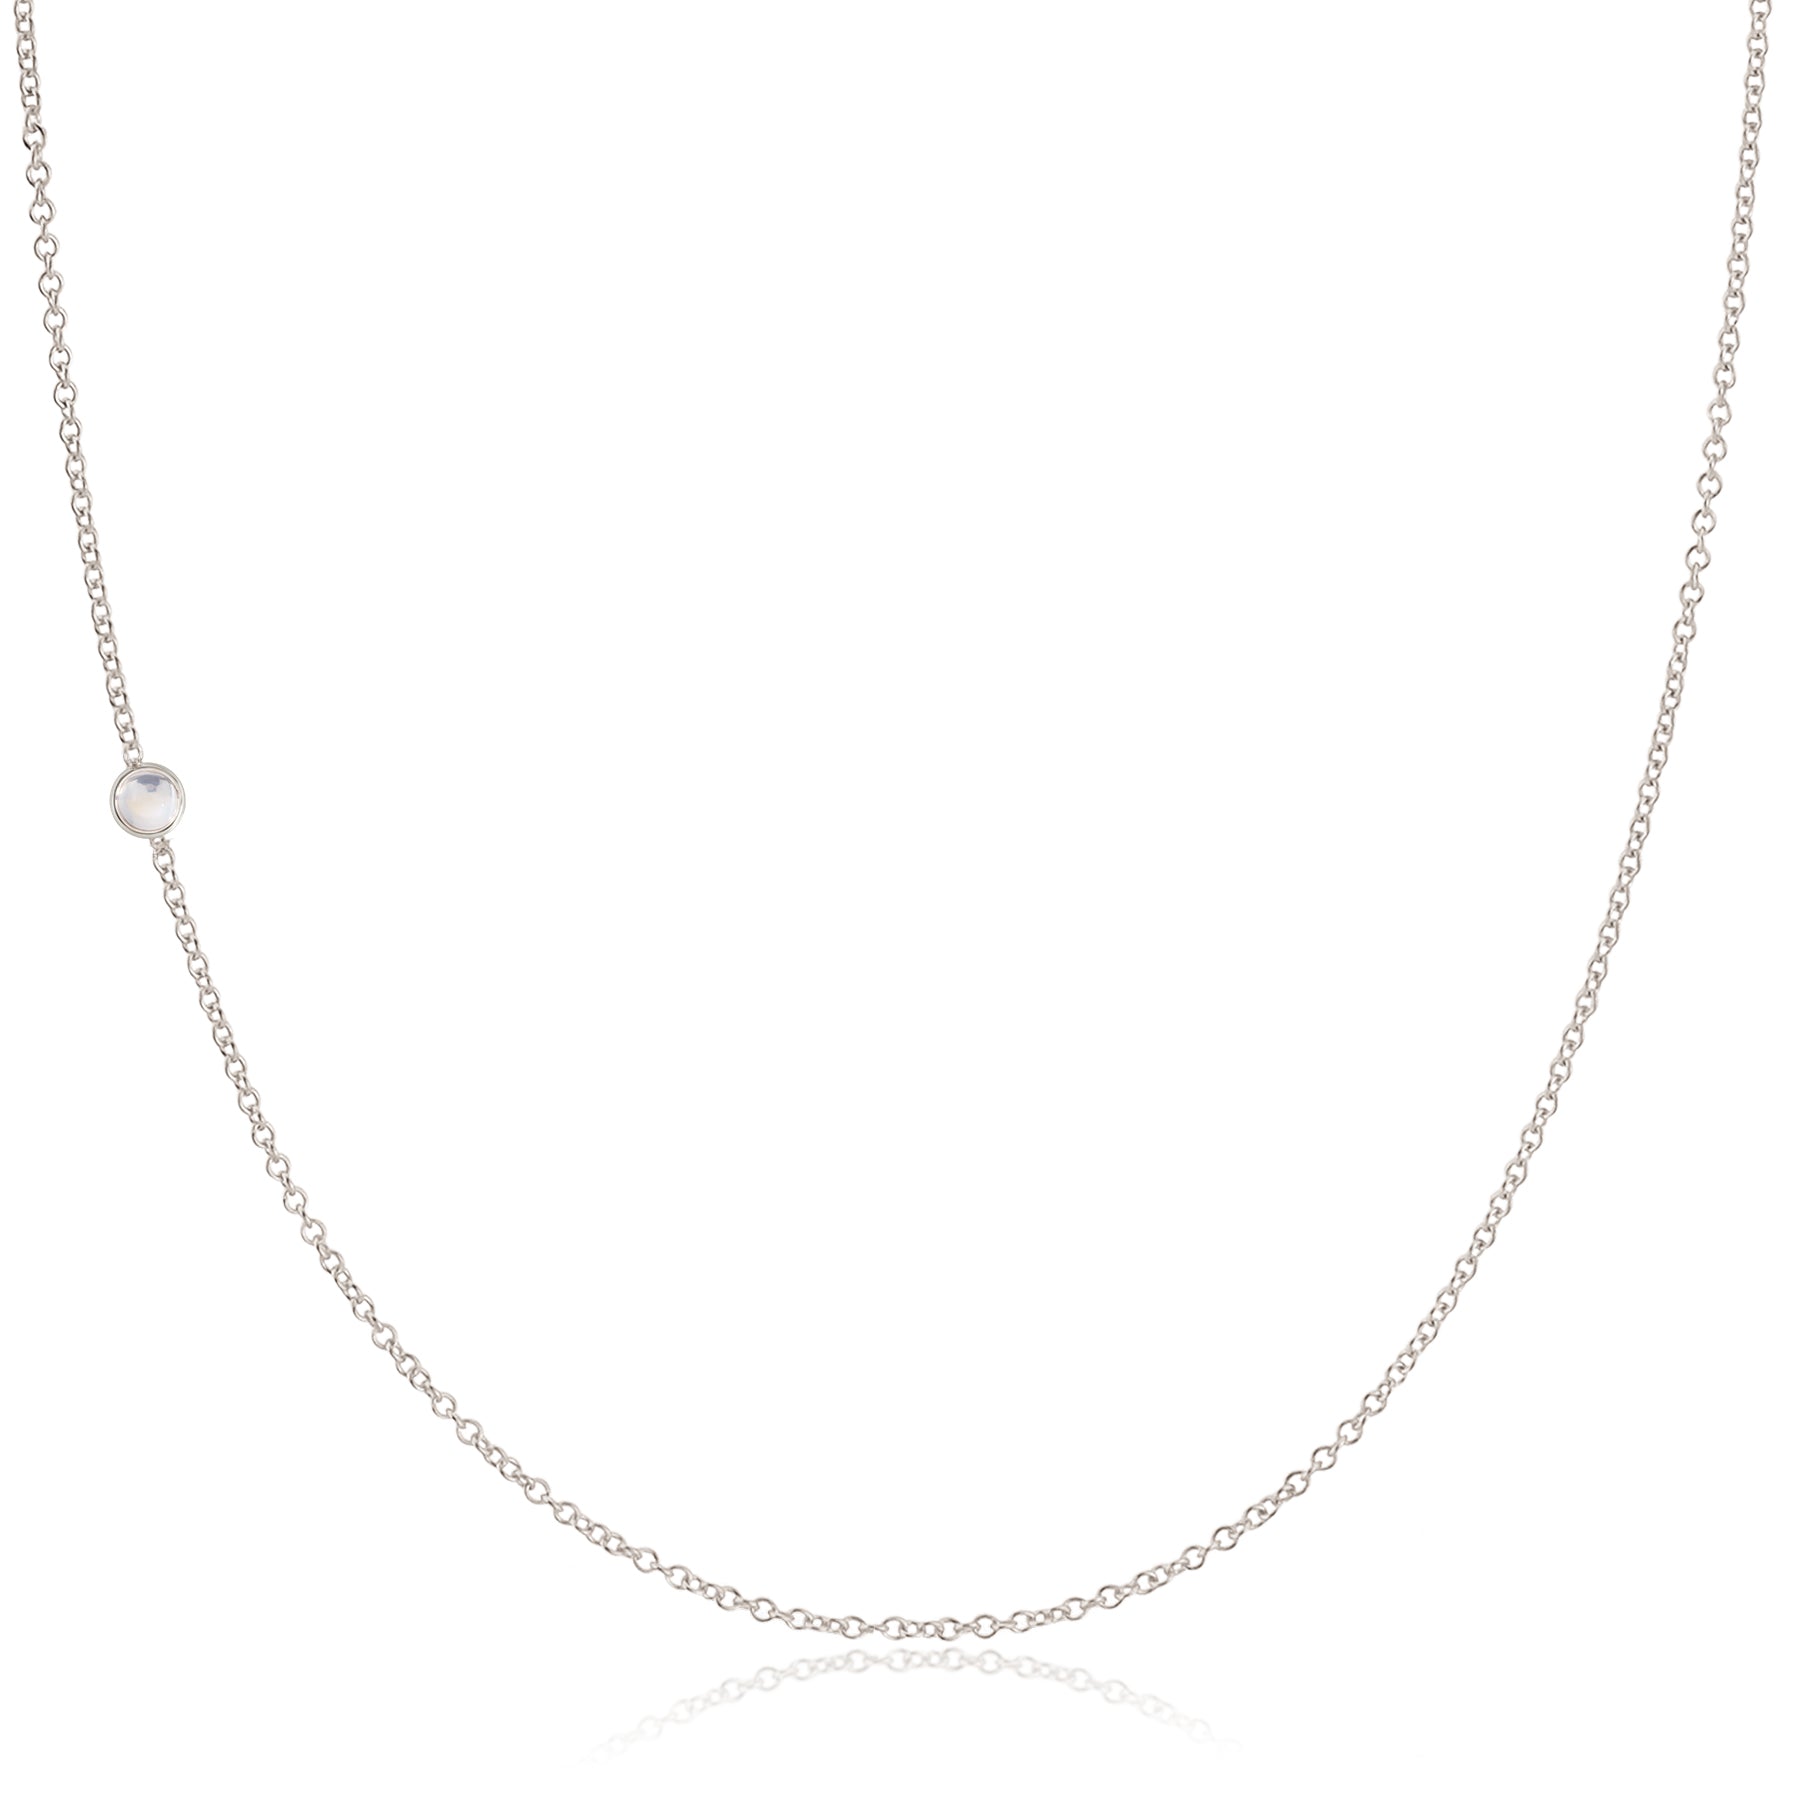 14K Gold Asymmetrical Birthstone Necklace - Moonstone (June)